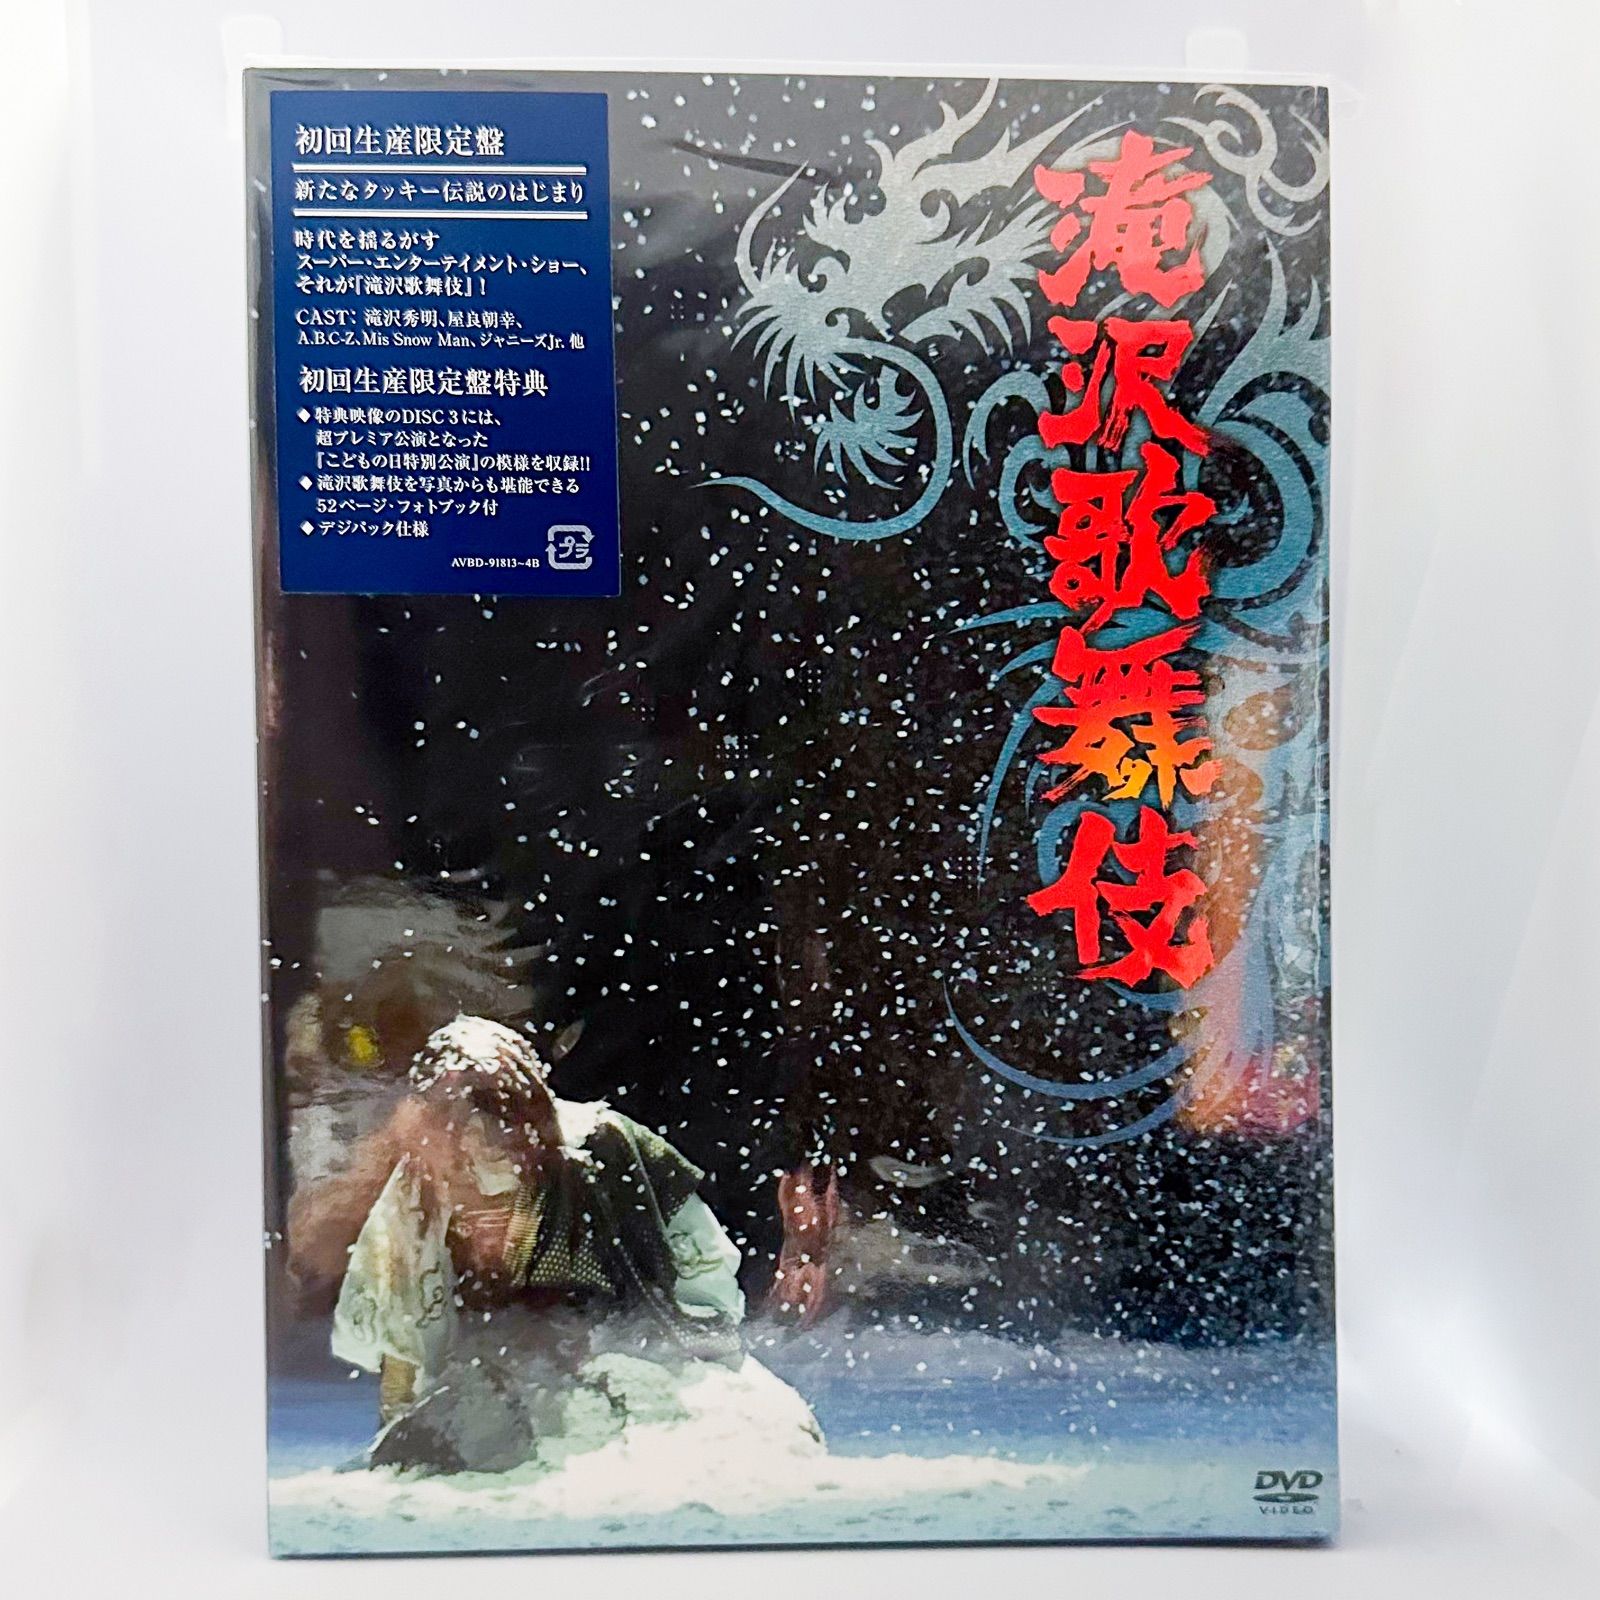 DVD「滝沢歌舞伎」初回生産限定盤 3枚組 滝沢 屋良 A.B.C-Z Mis Snow Man 2010